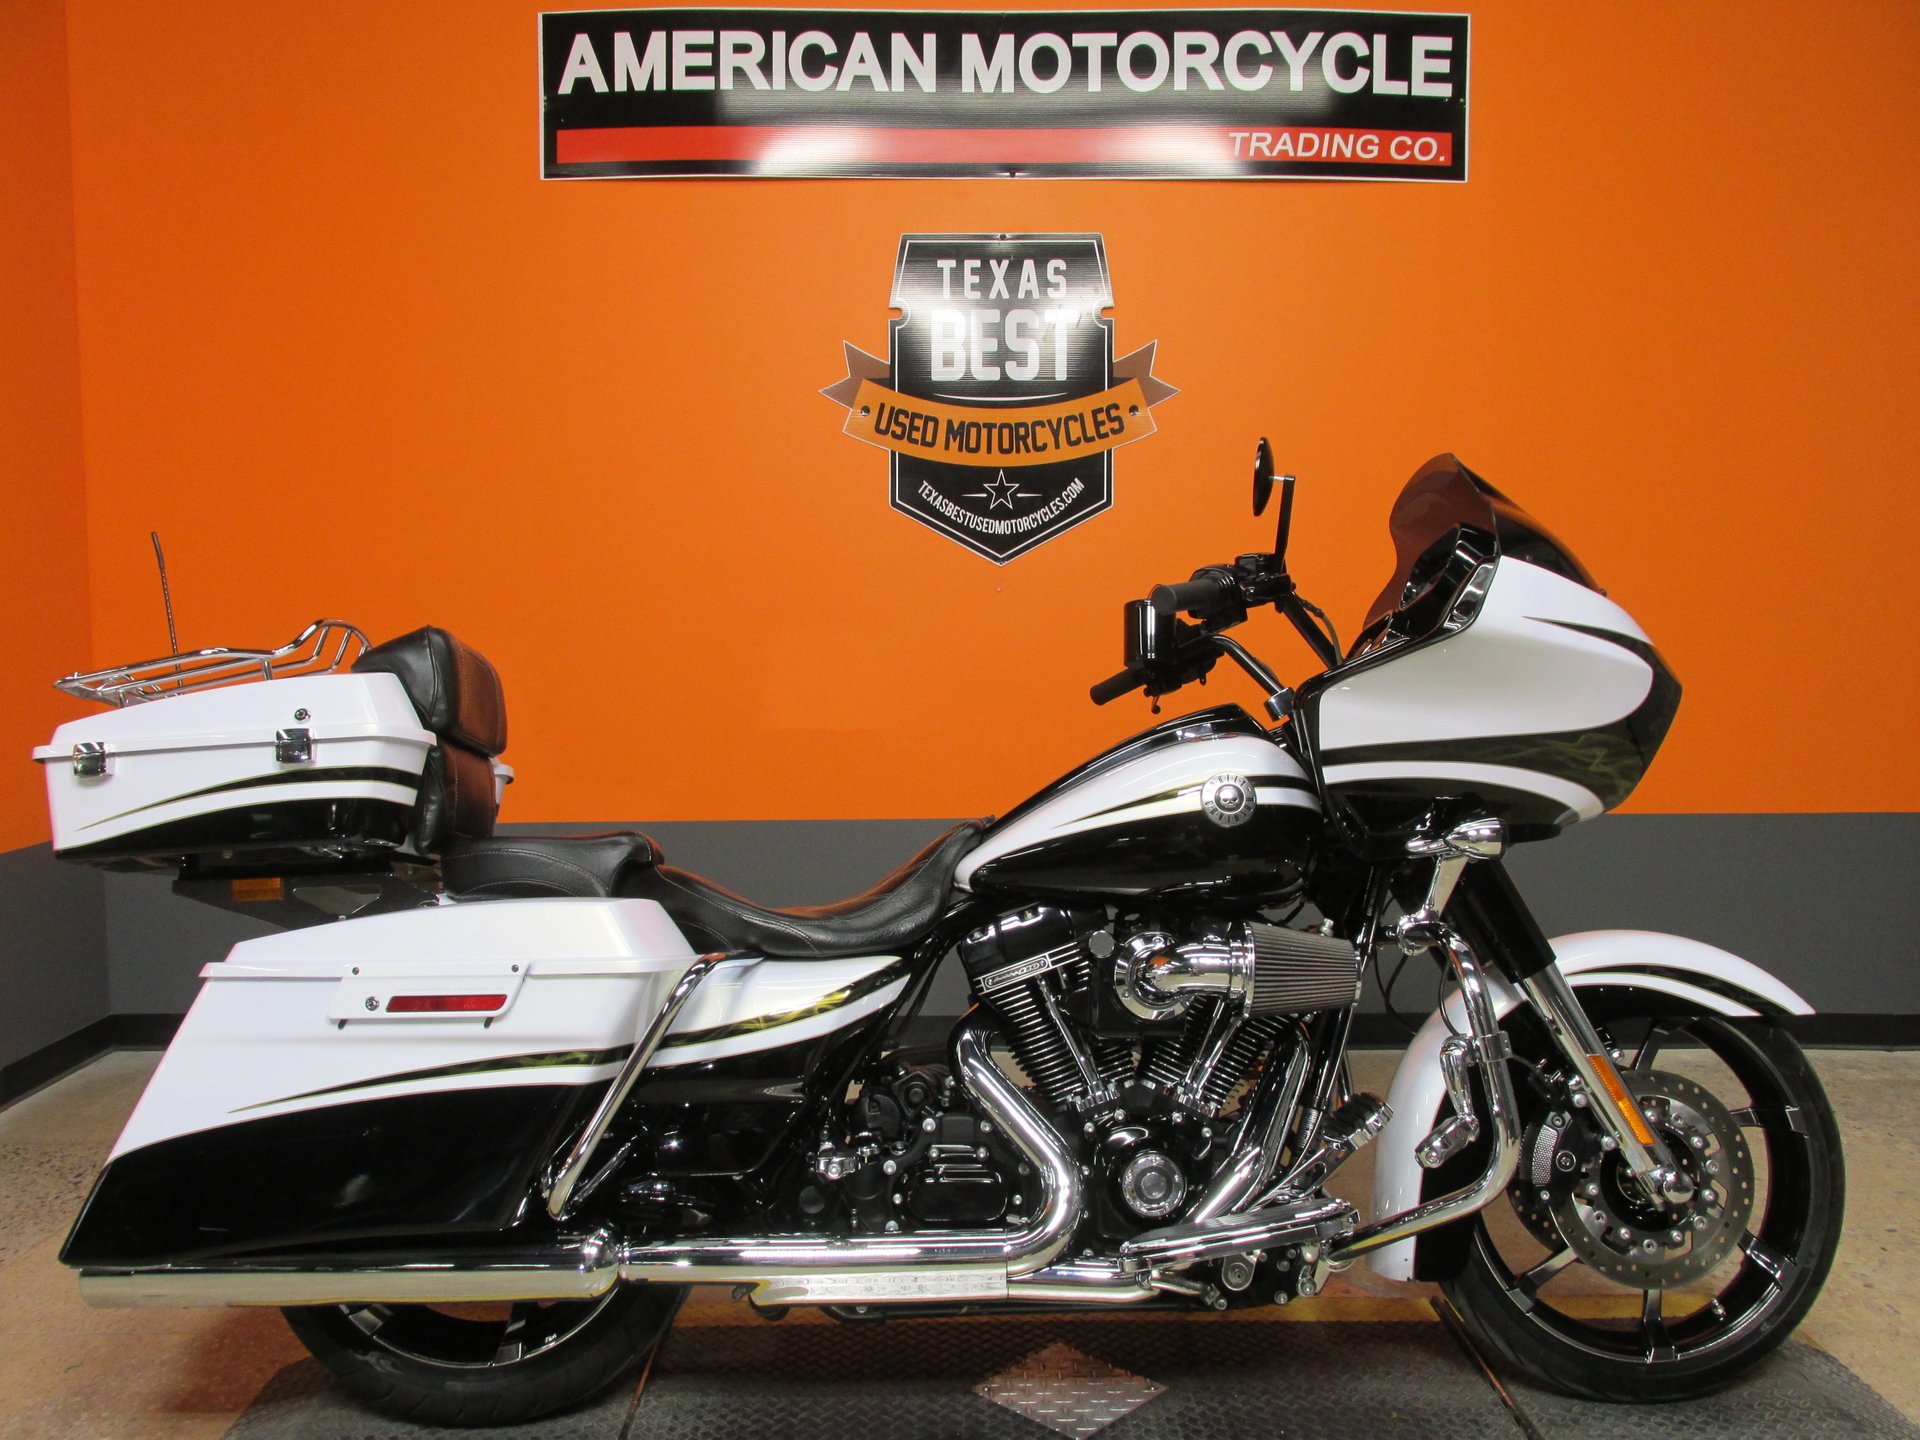 2012 Harley Davidson Cvo Road Glide American Motorcycle Trading Company Used Harley Davidson Motorcycles